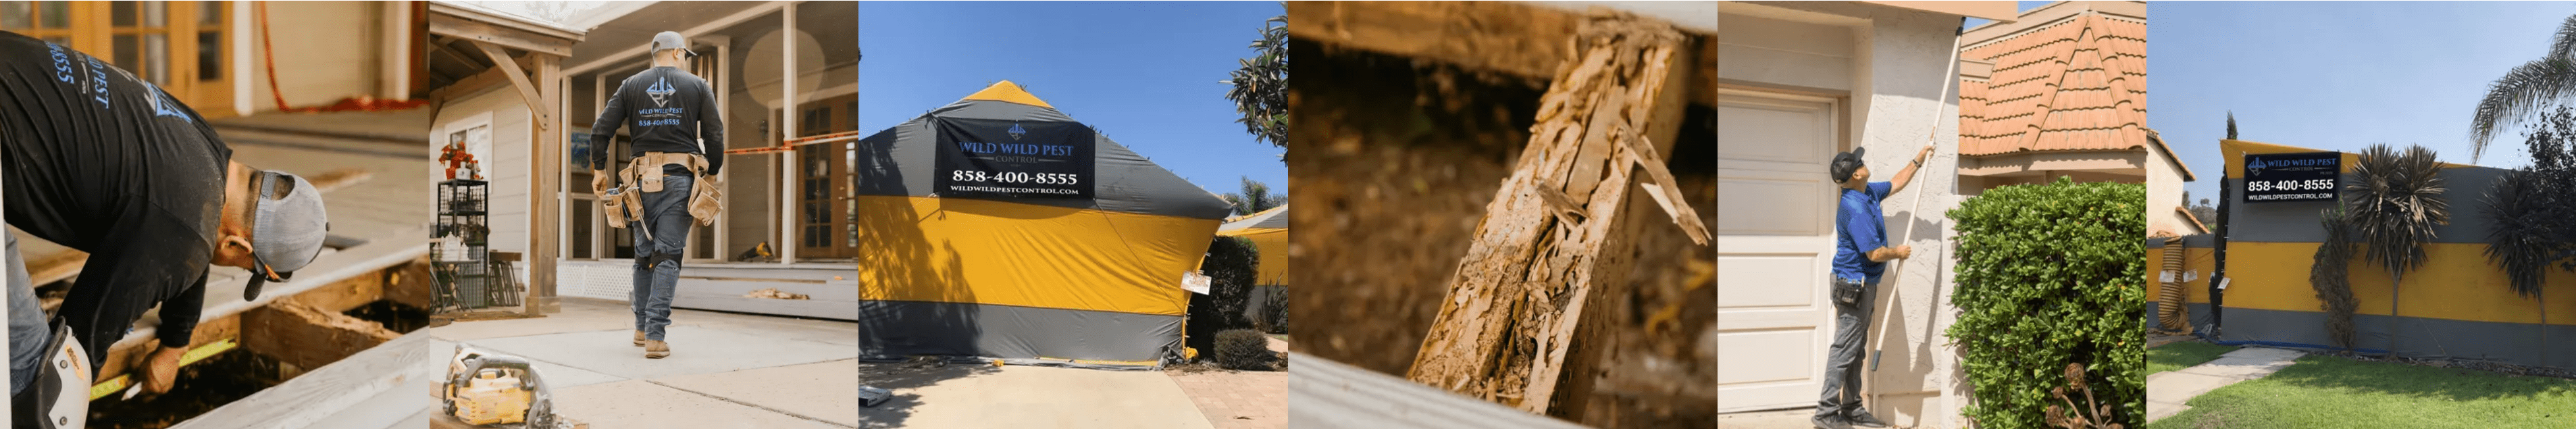 Termite Treatment San Diego